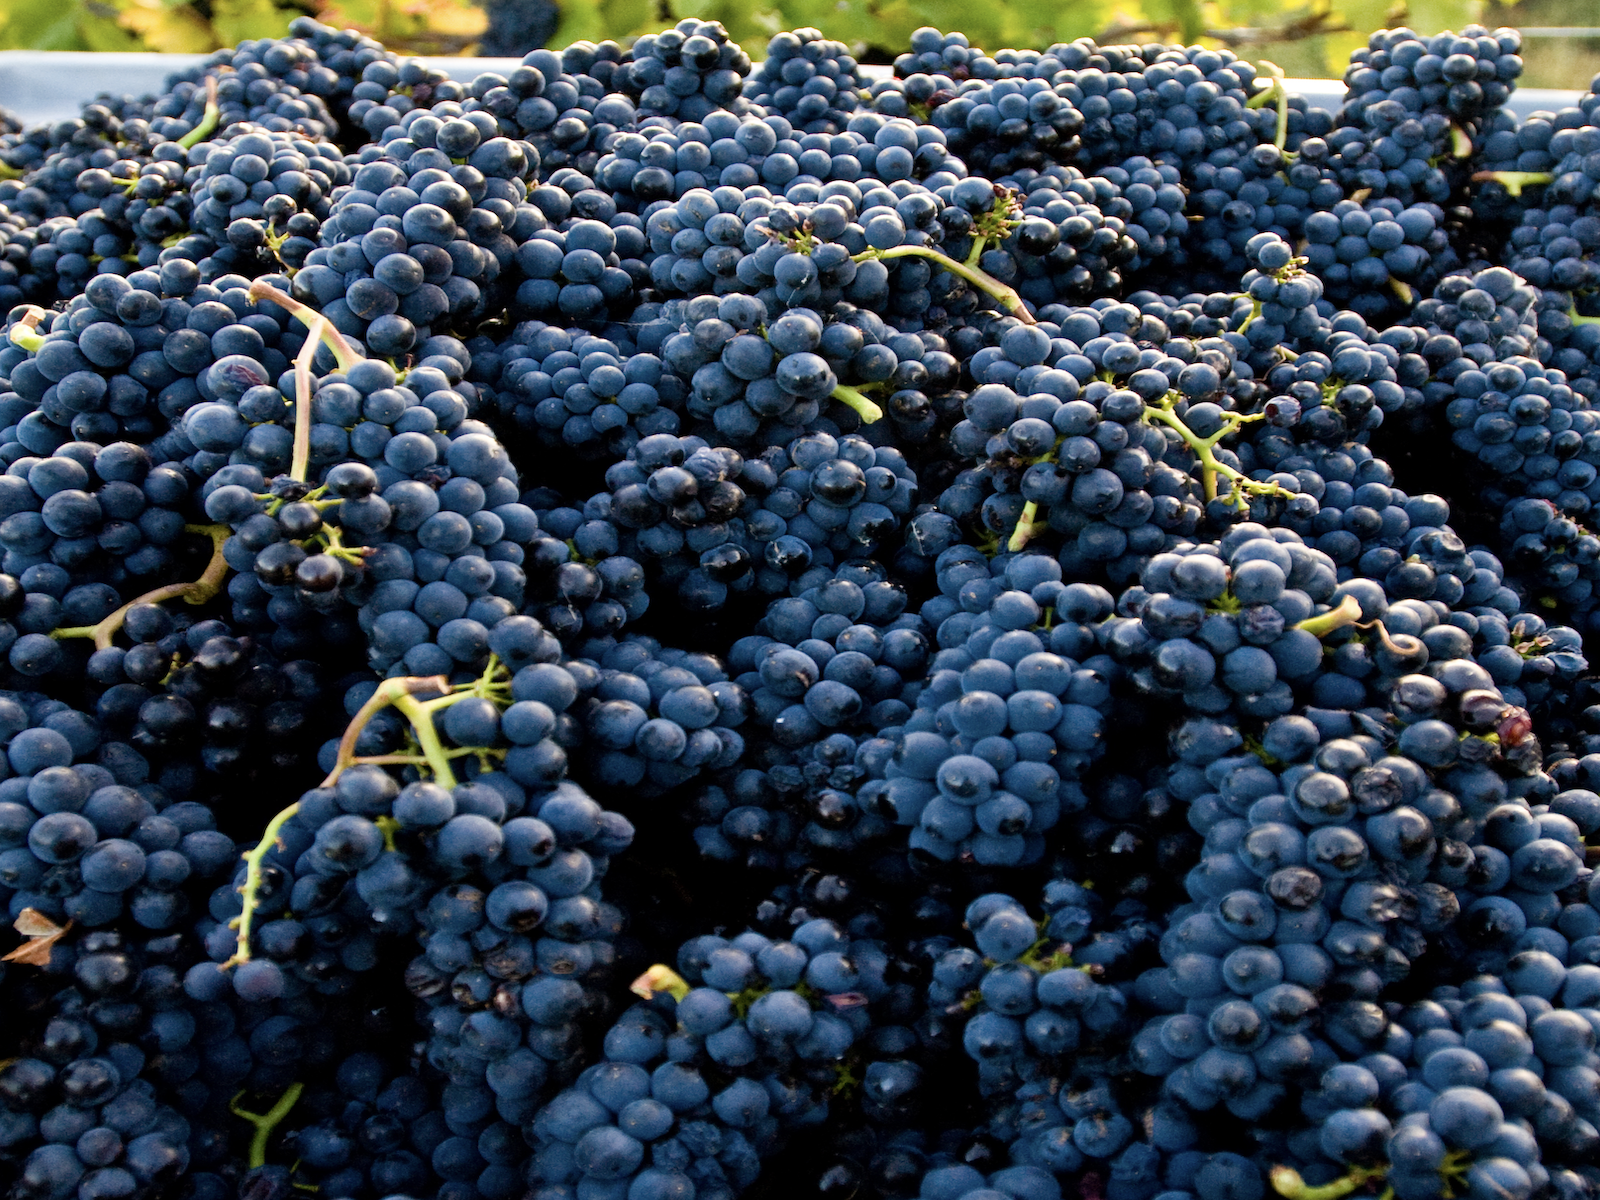 Pinot Noir&nbsp;is&nbsp;one of France's oldest&nbsp;grapes